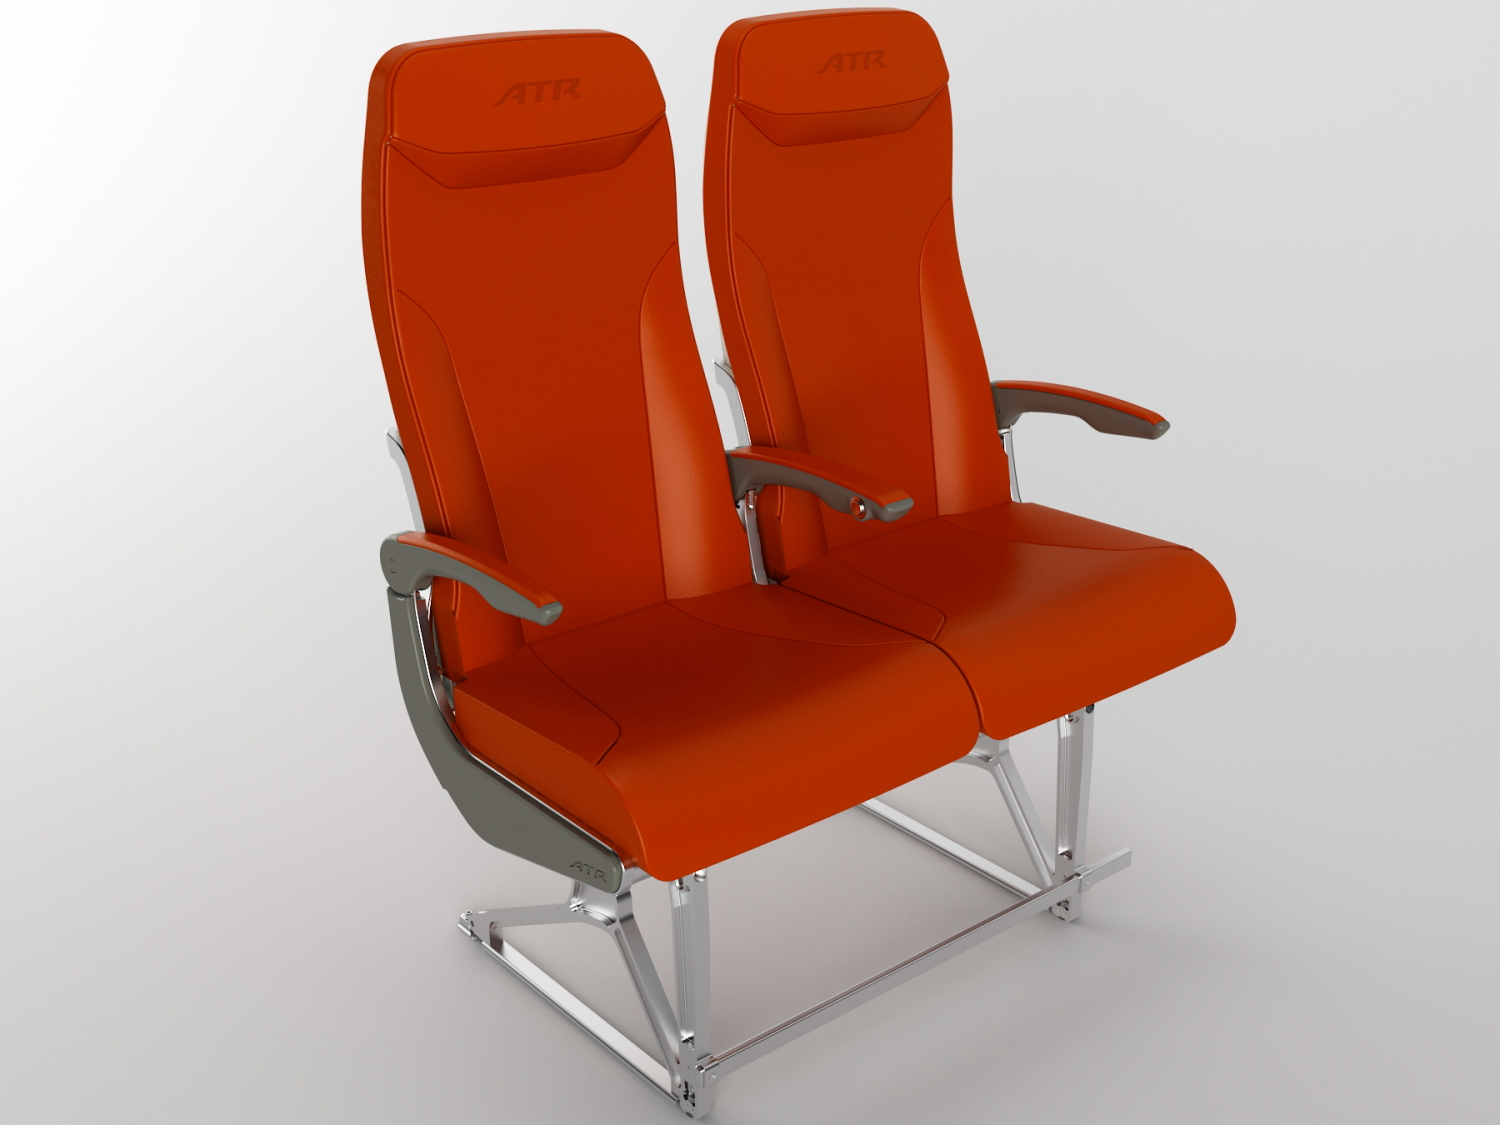 ATR's new passenger seat the Neo Prestige